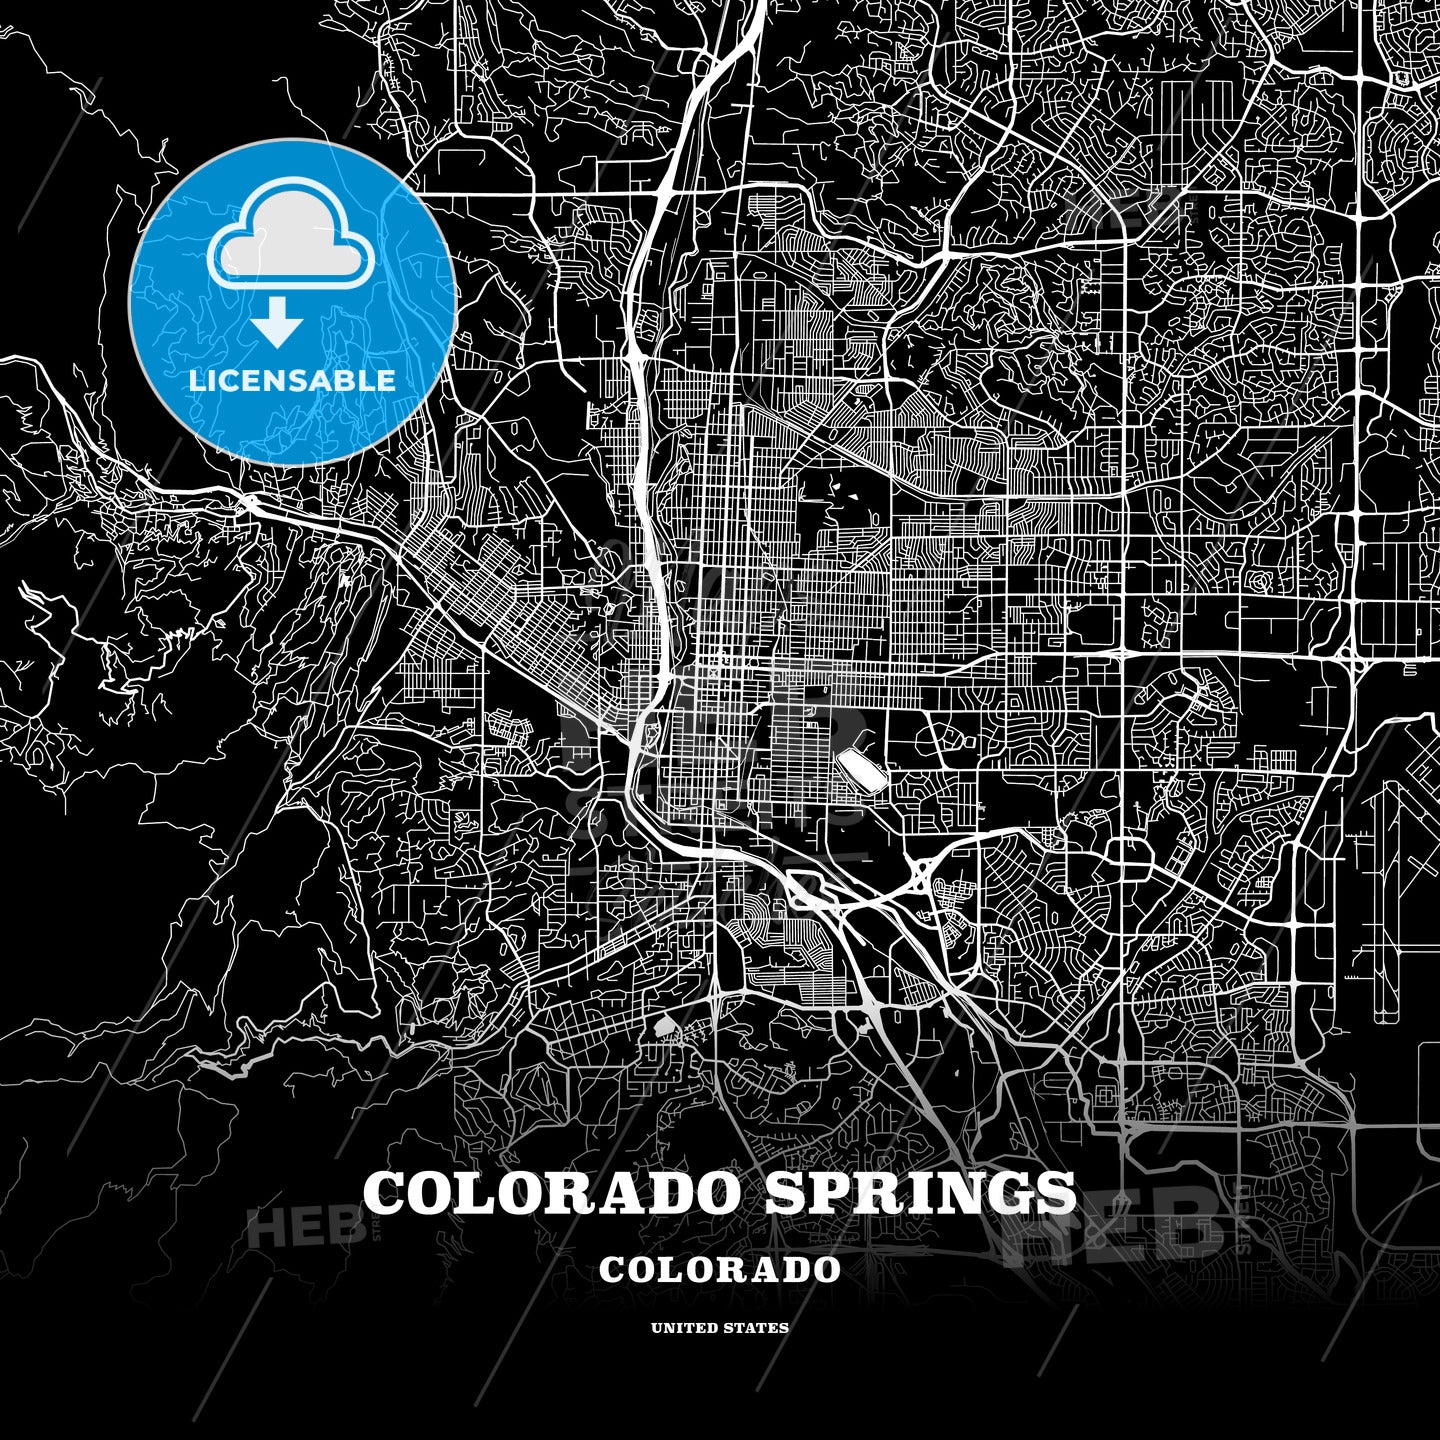 Colorado Springs, Colorado, USA map